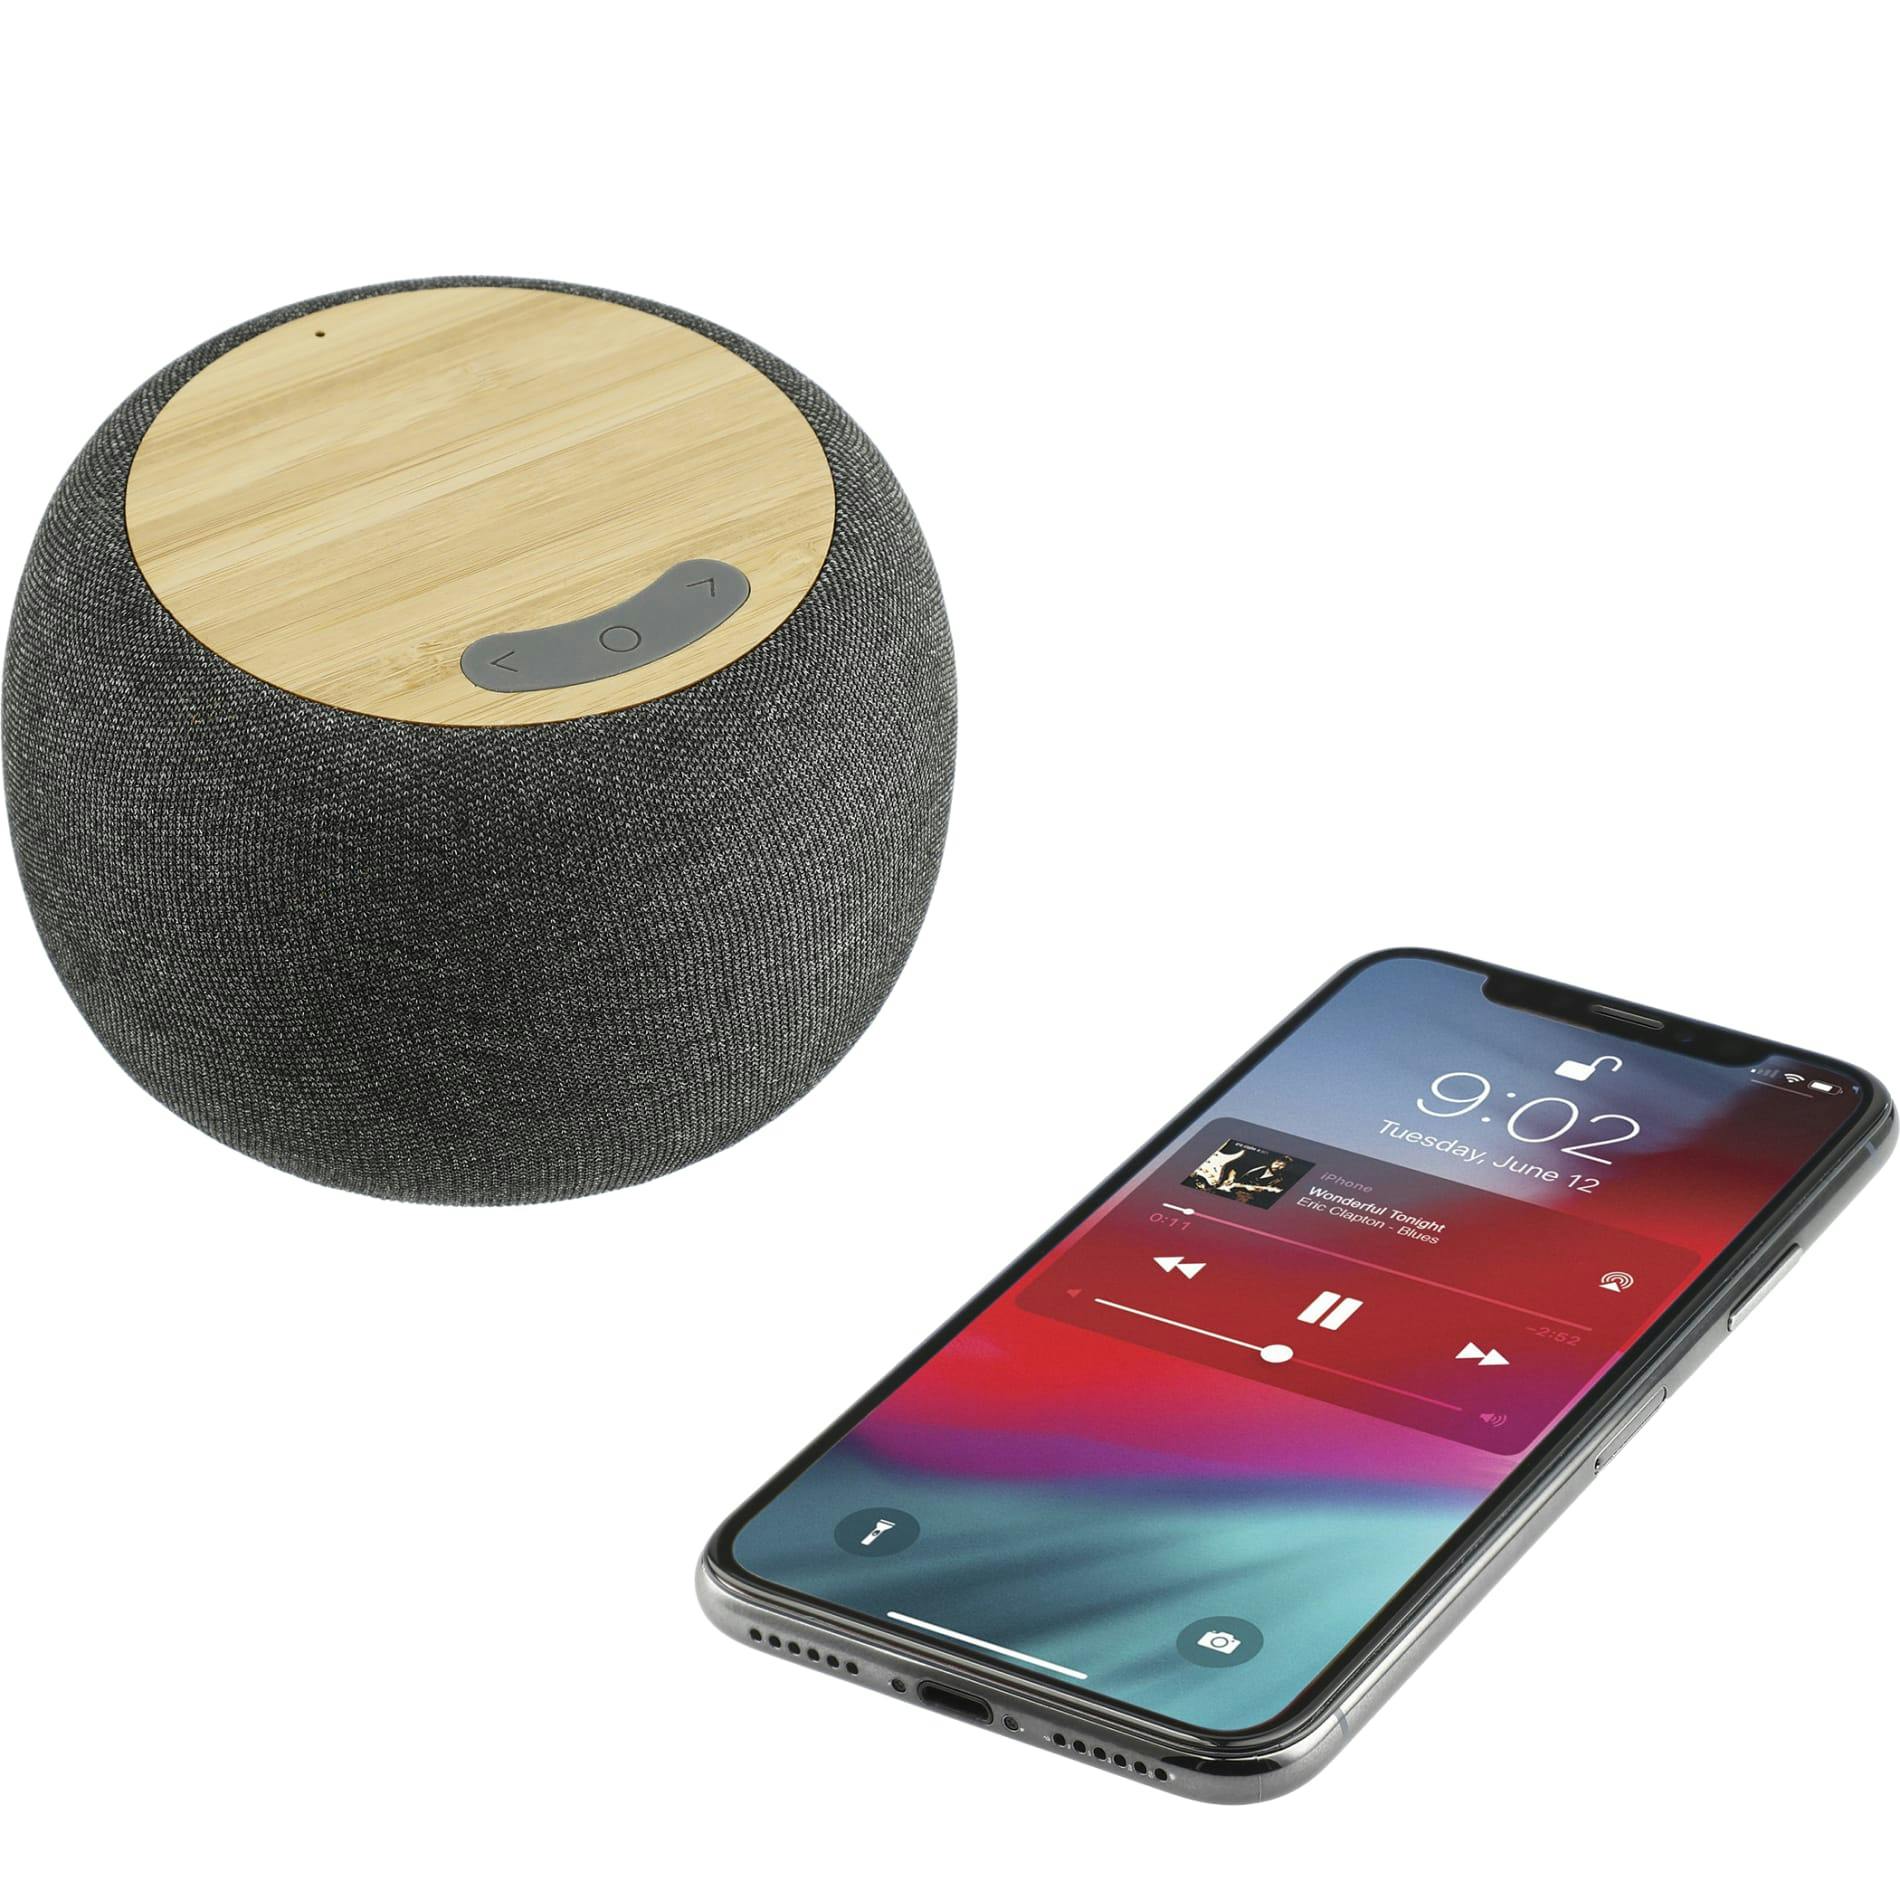 Garm Fabric & Bamboo Speaker with Wireless Chargin - additional Image 3